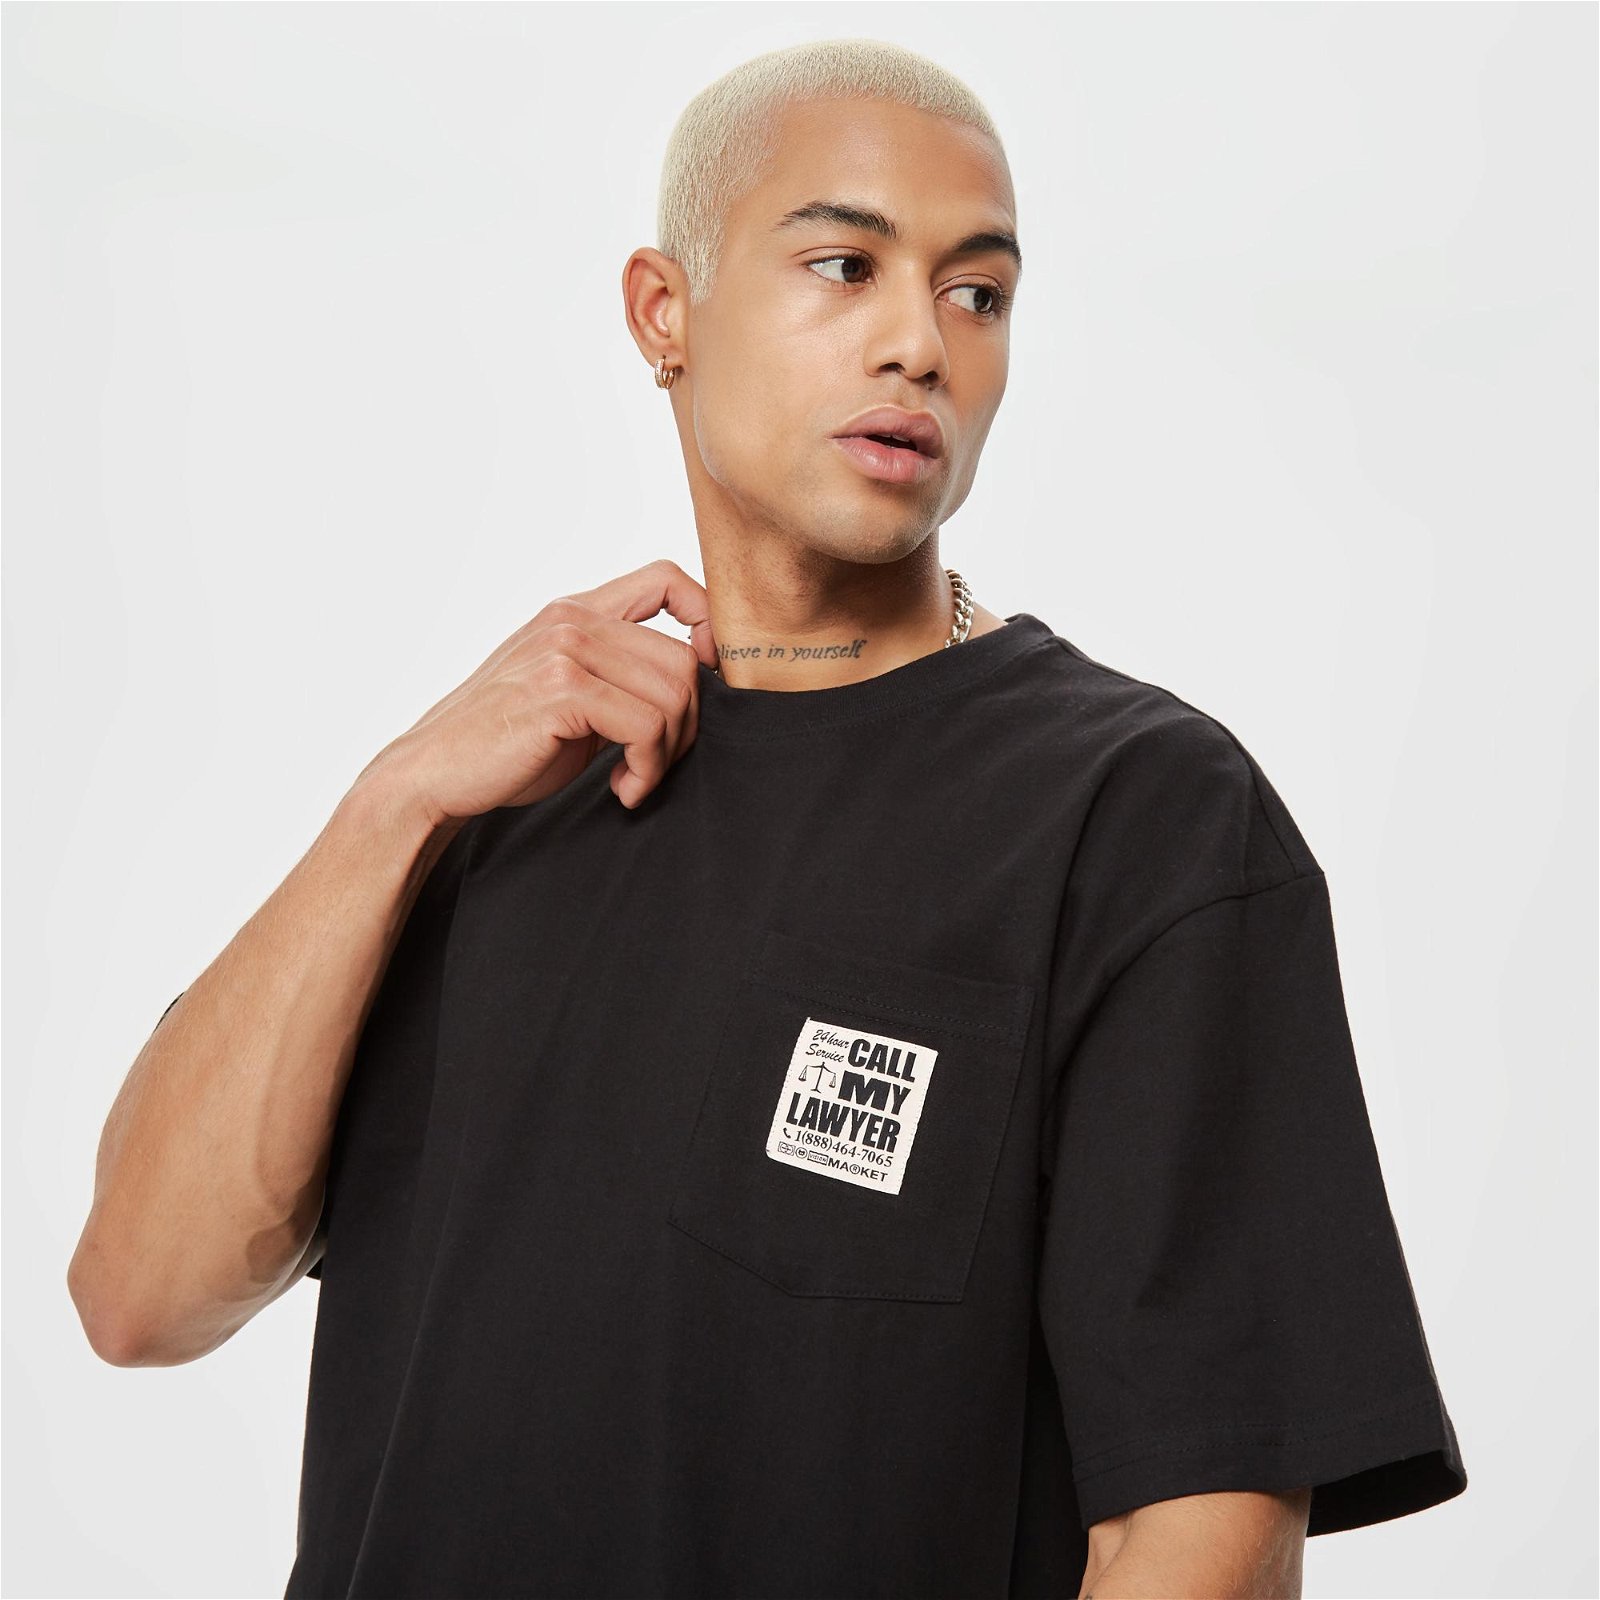 Market 24 Hr Lawyer Service Pocket Erkek Siyah T-Shirt